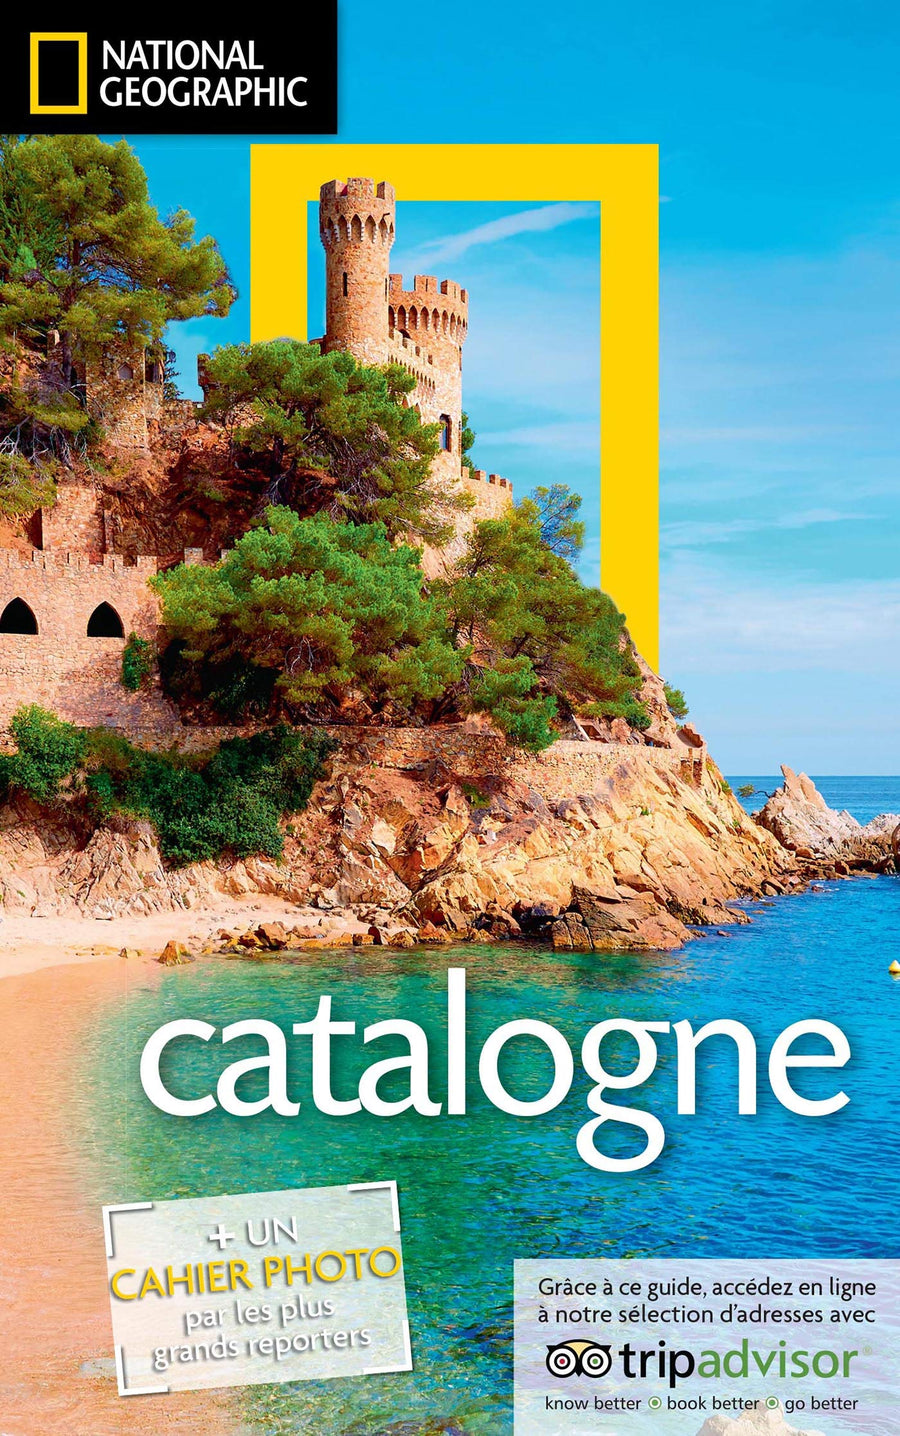 Guide de voyage - Catalogne | National geographic guide de voyage National Geographic 